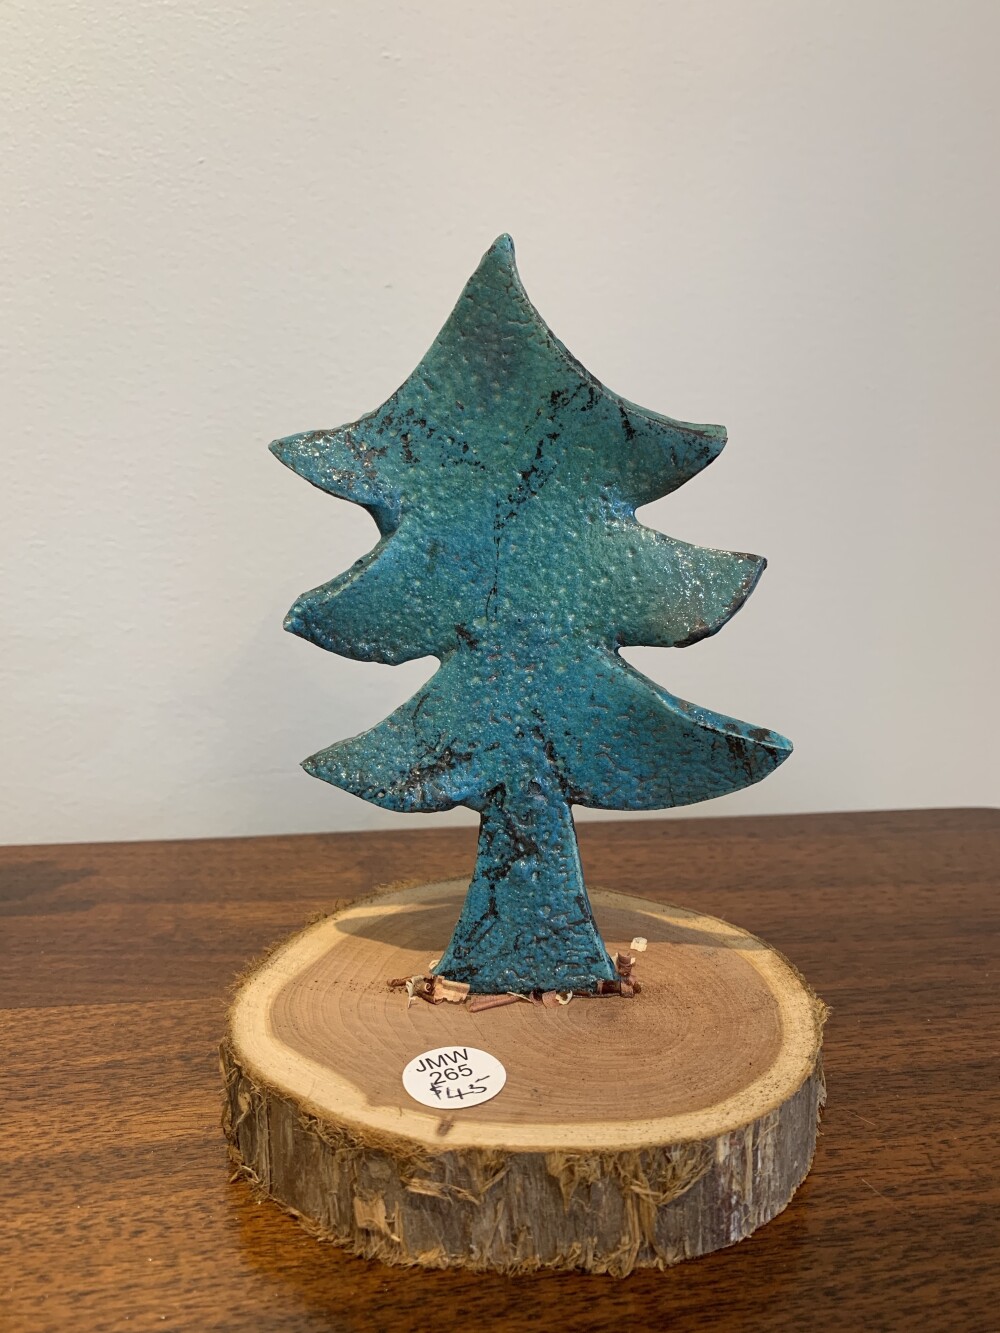 Christmas Tree - Raku Pottery in Wood